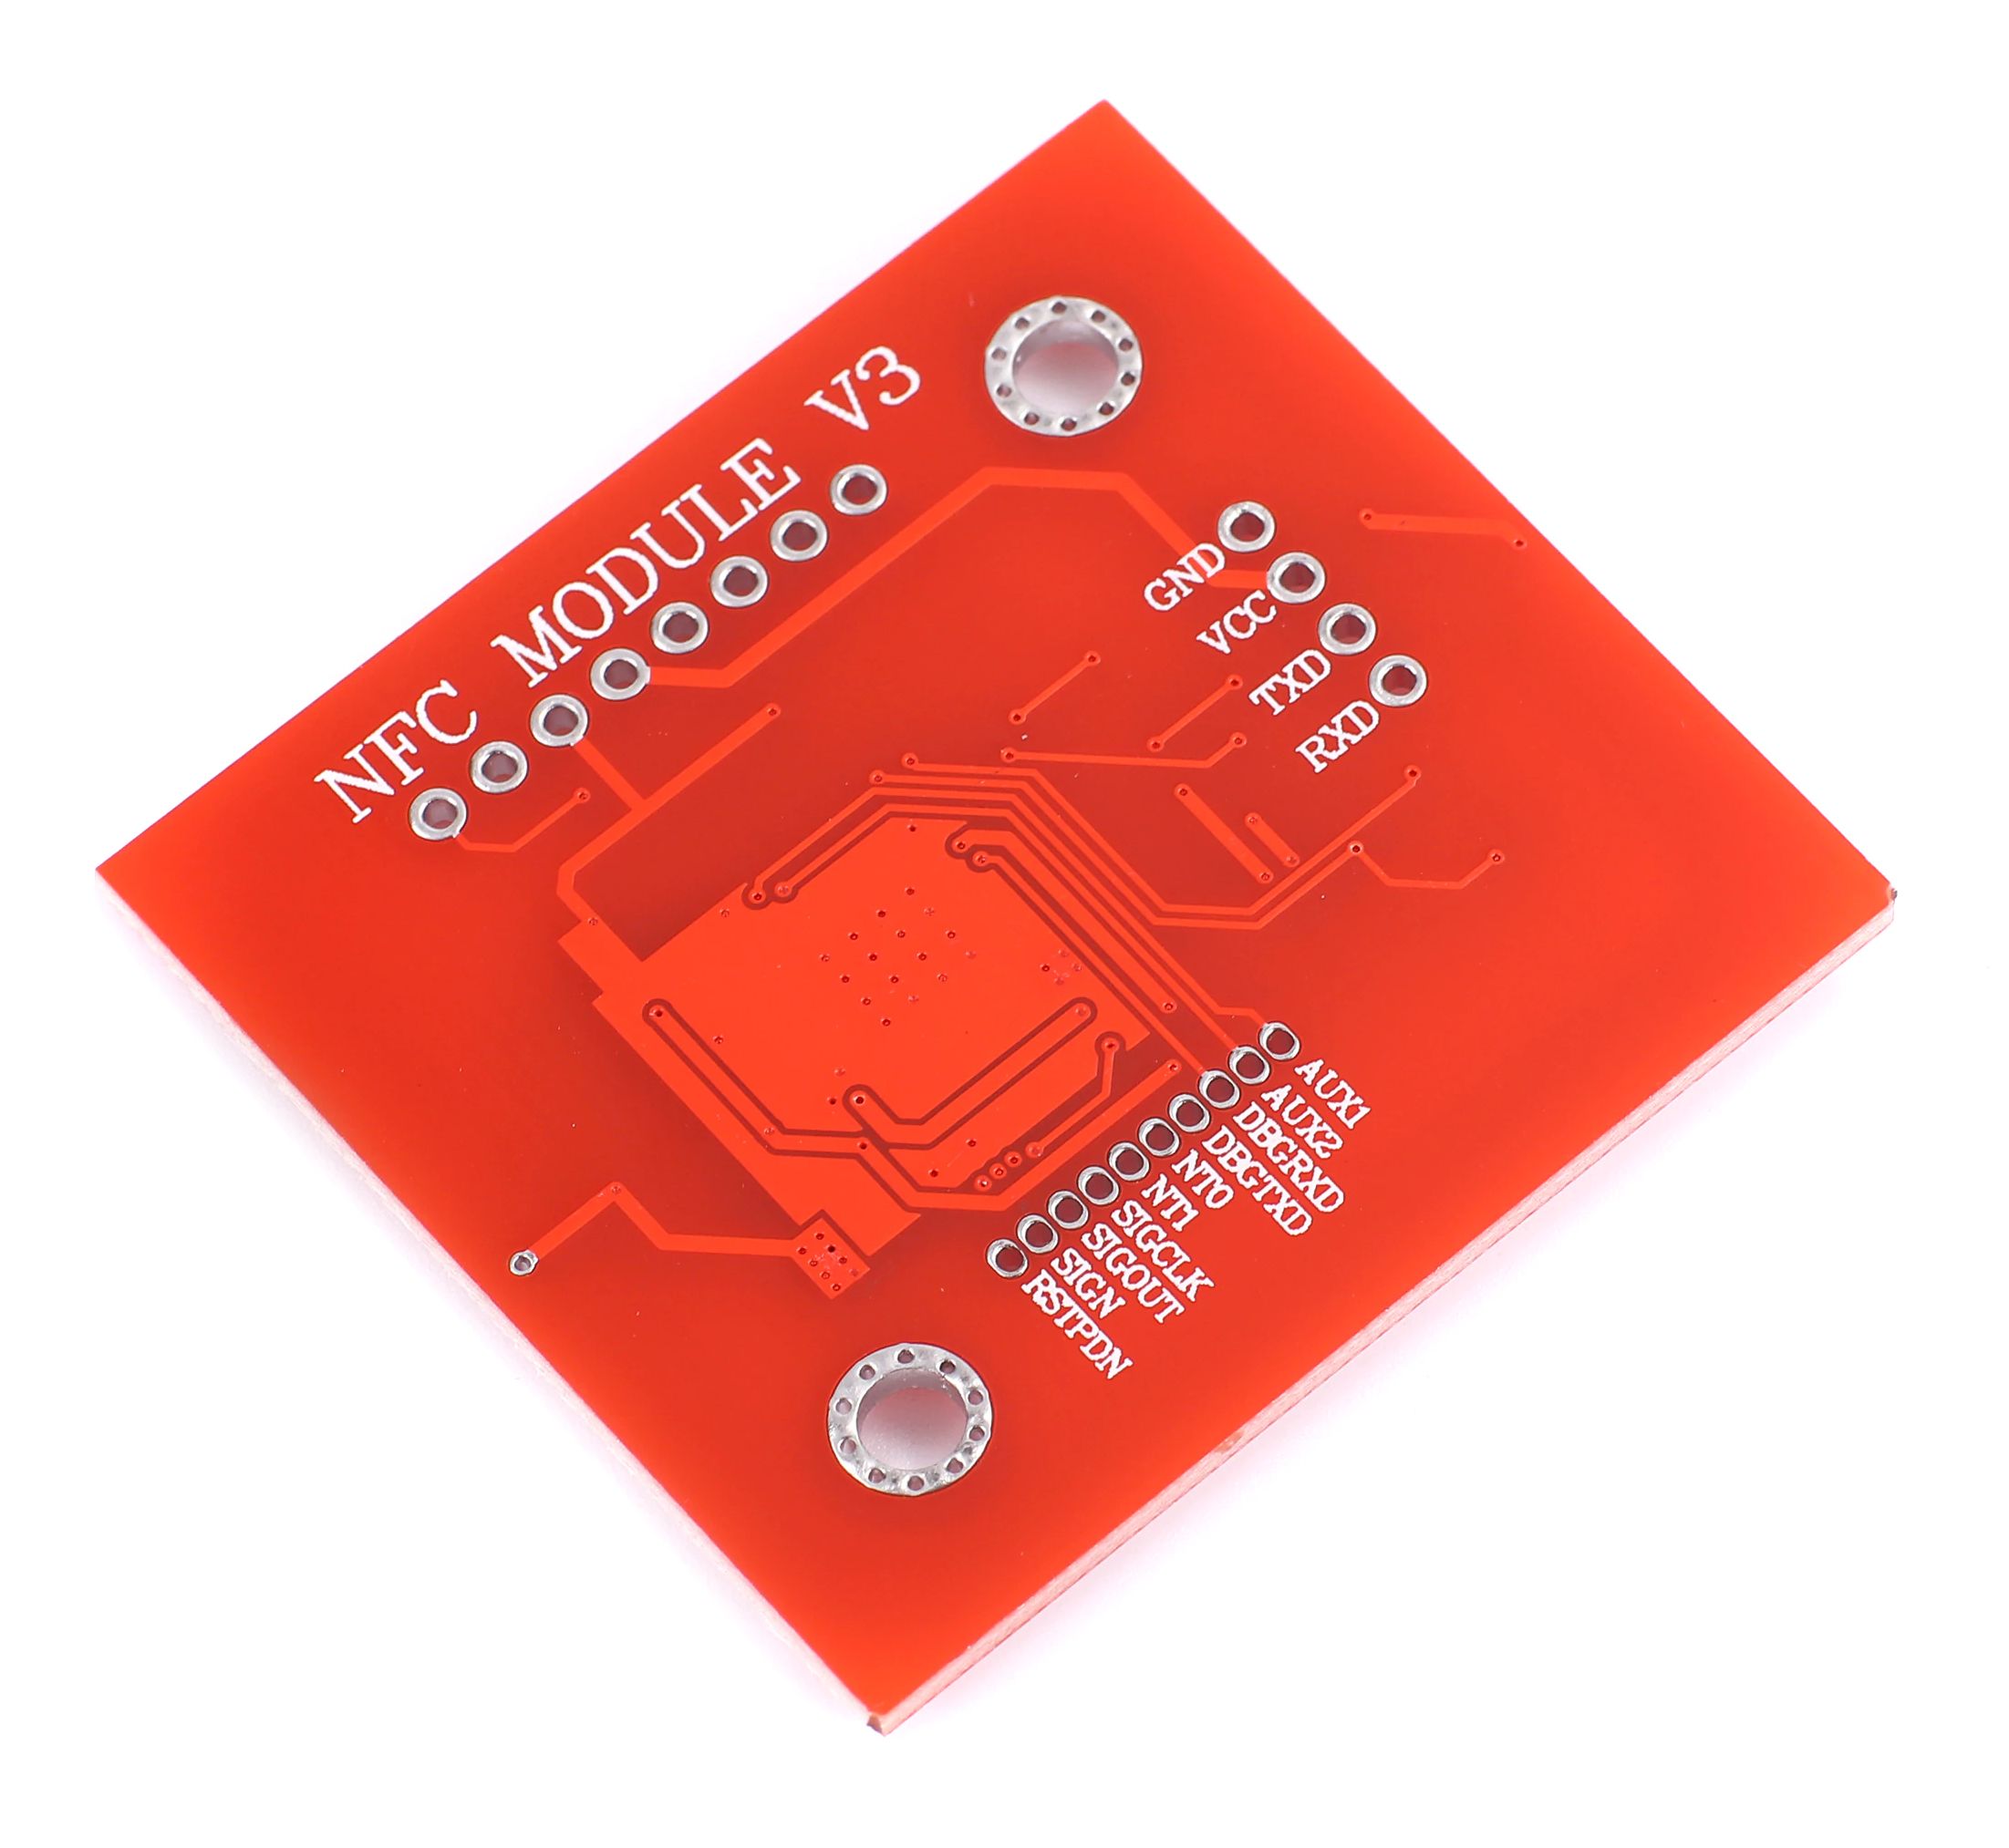 RFID NFC IC Card Sensor Module I2C ISO14443A Mifare PN532 02